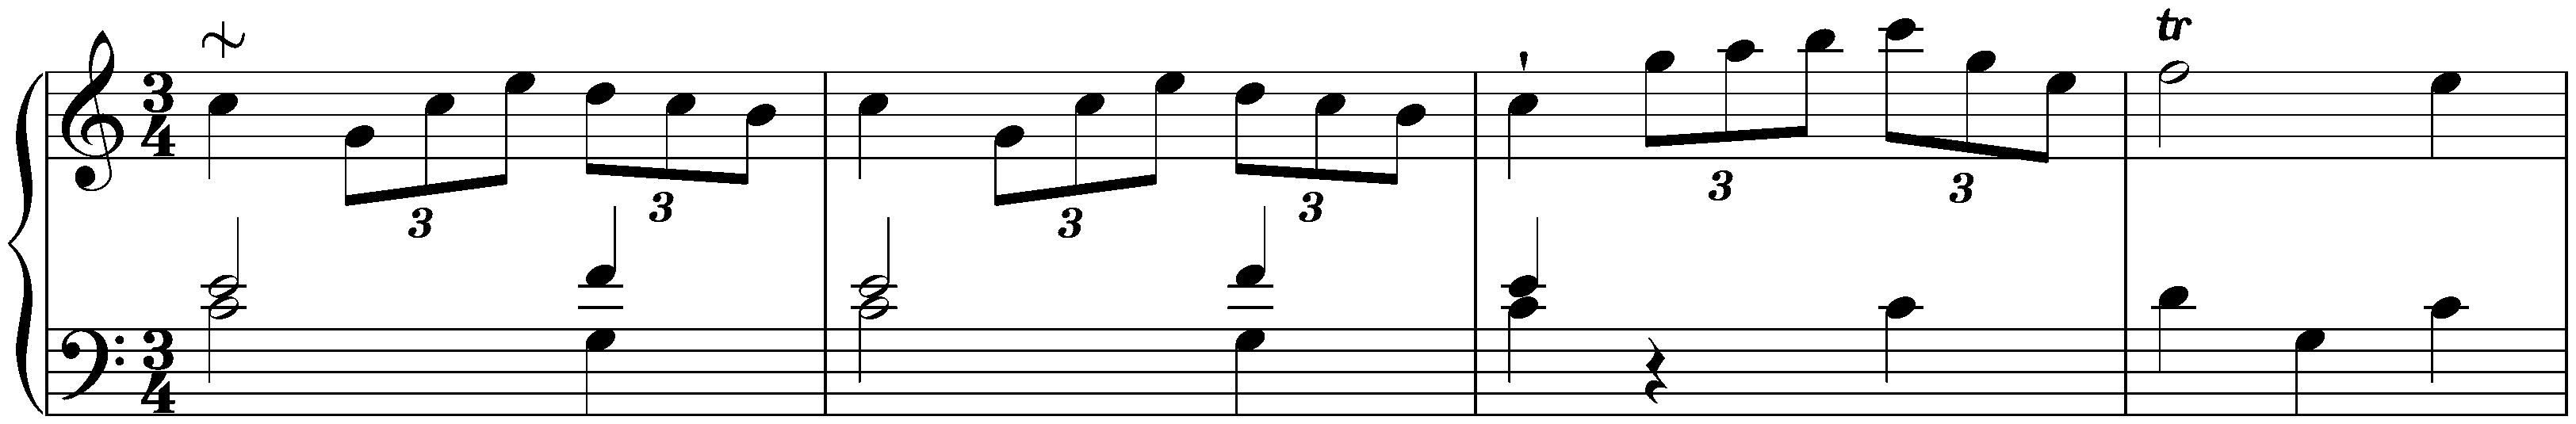 Sonata in C major, Hob. XVI:1; 3. Menuet – Trio